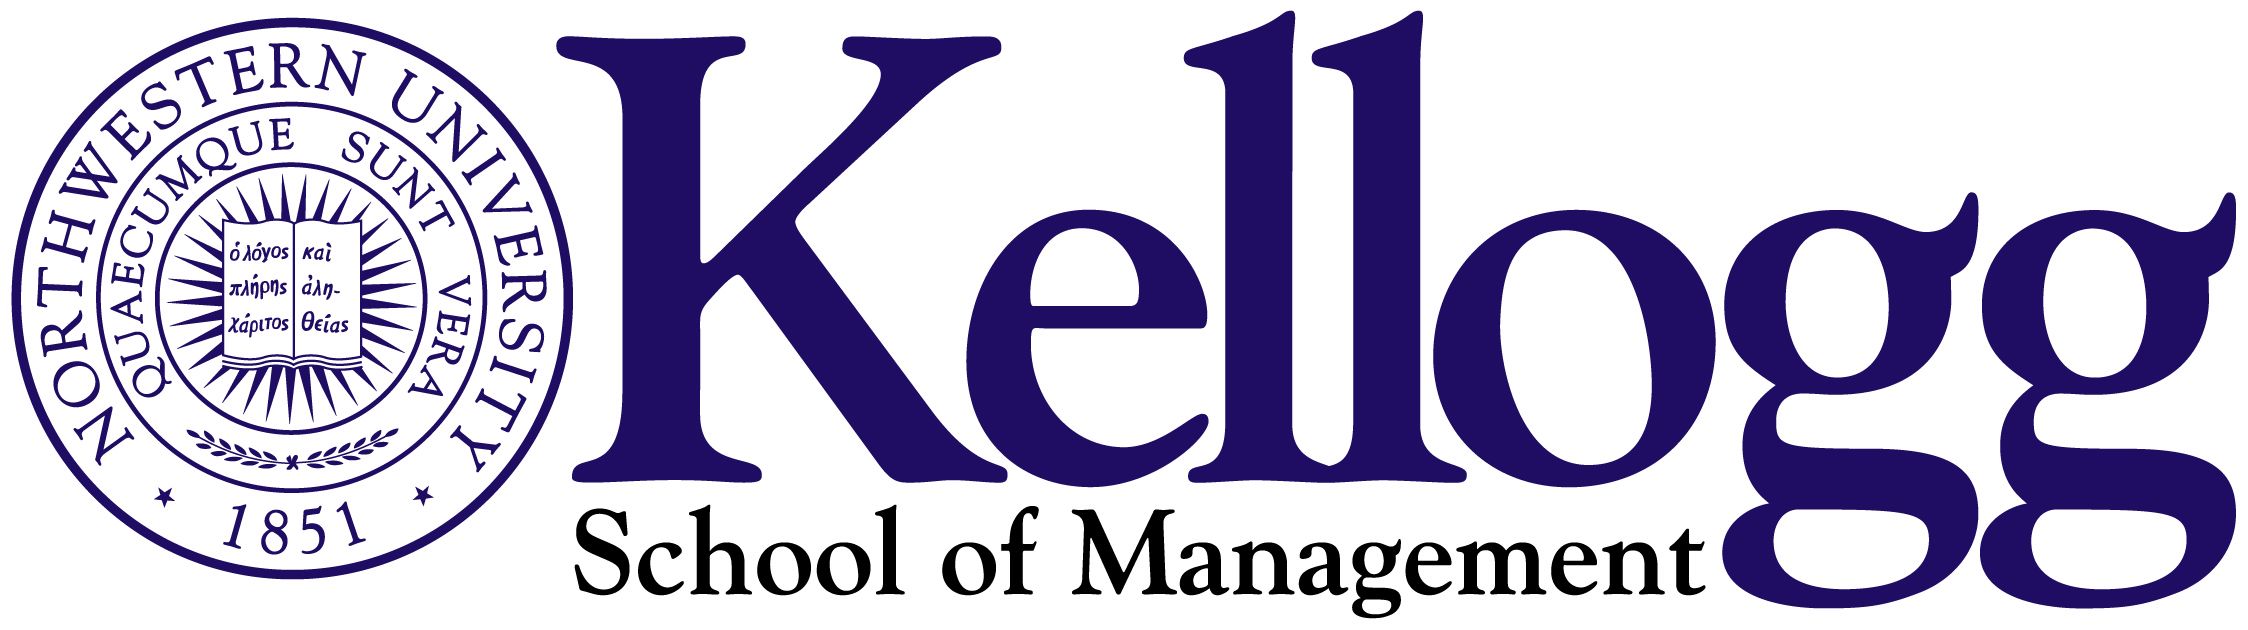 Northwestern University (Kellogg) logo